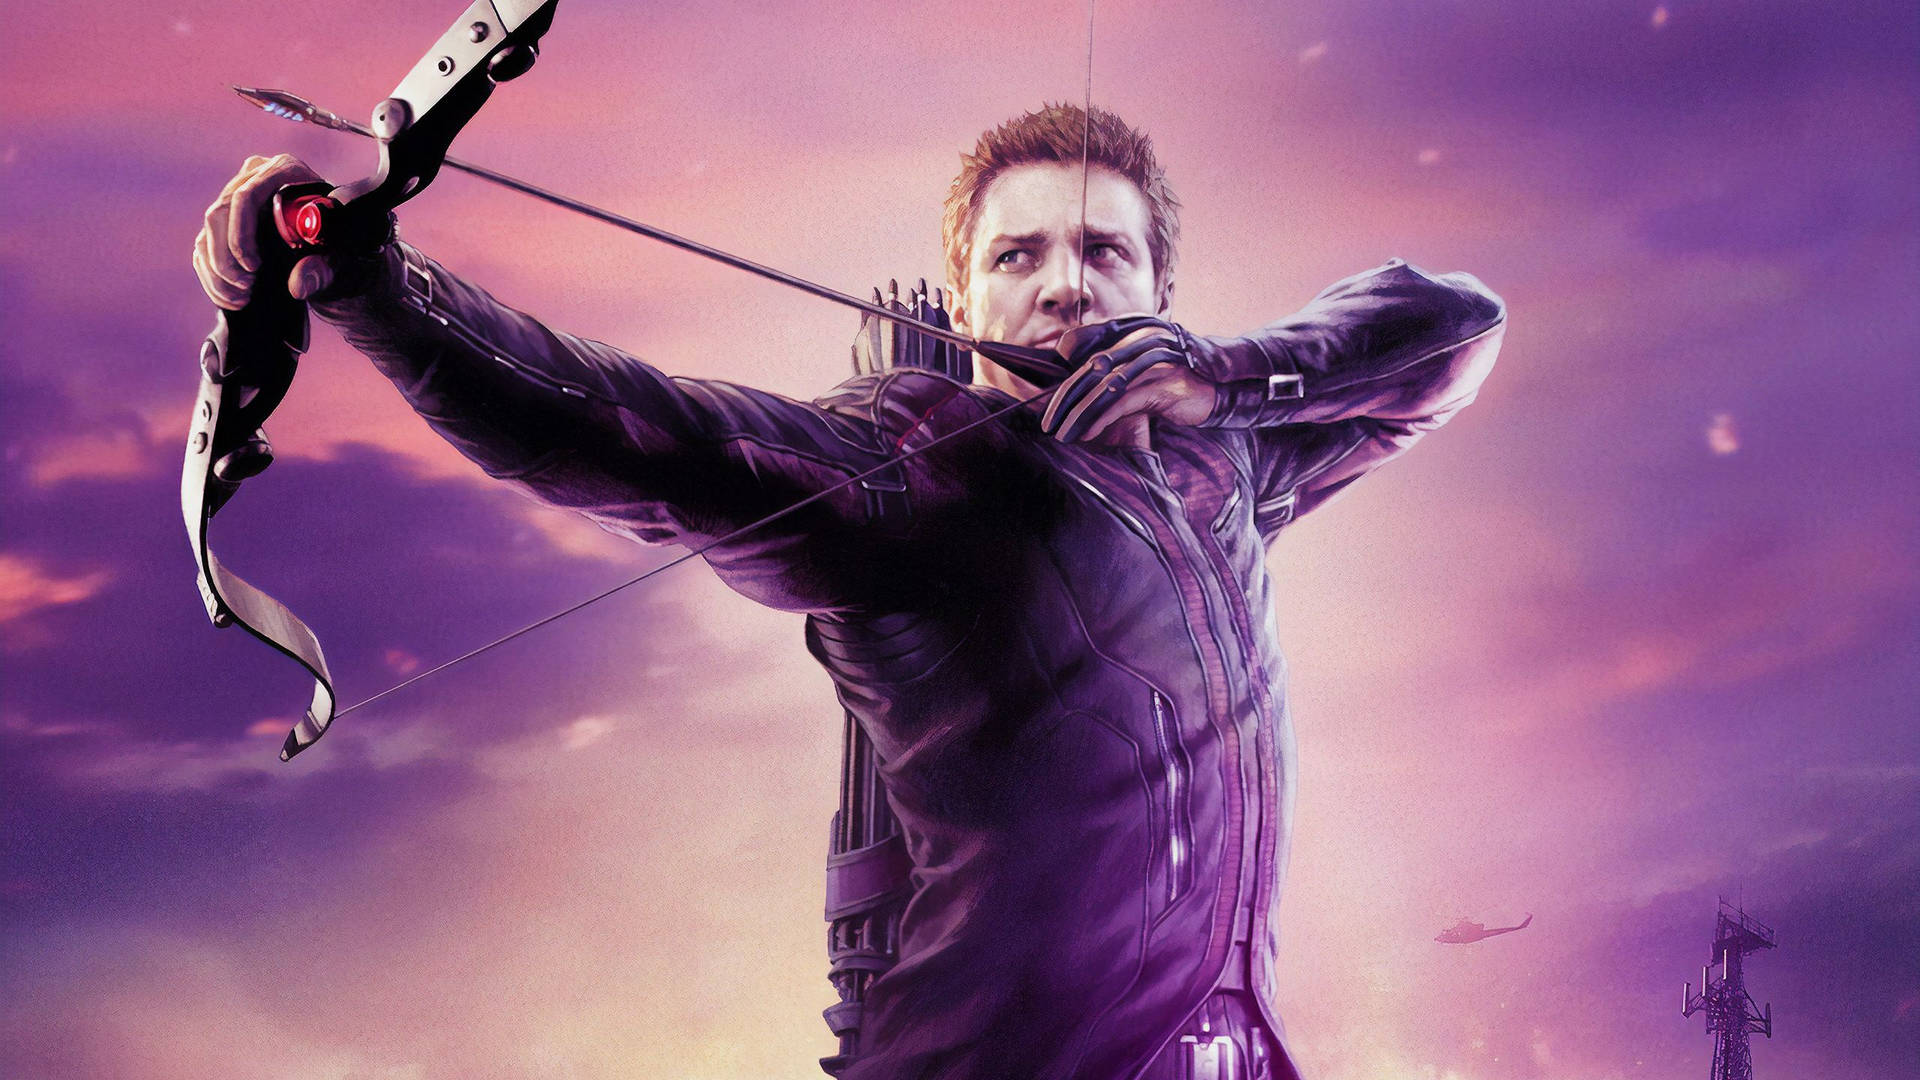 Archery Clint Barton Background